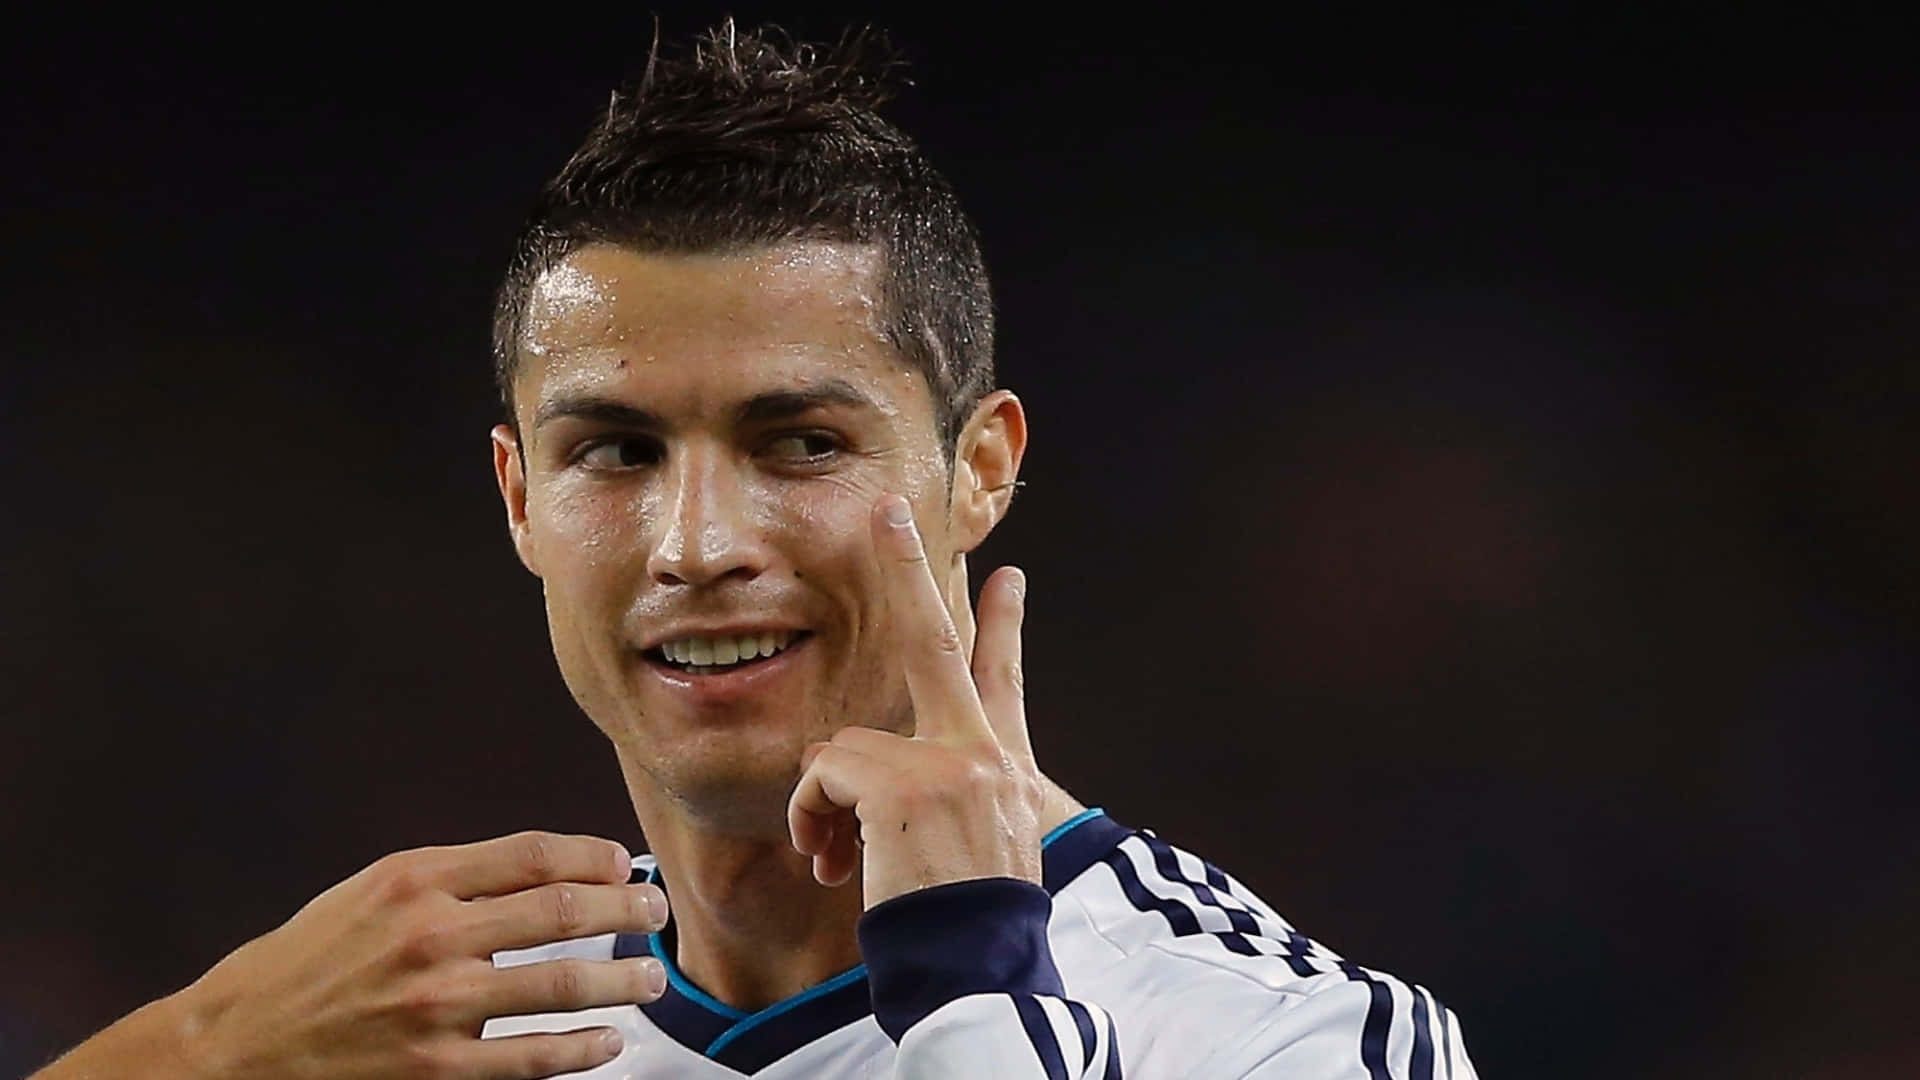 Cristiano Ronaldo striking an iconic pose on the football field